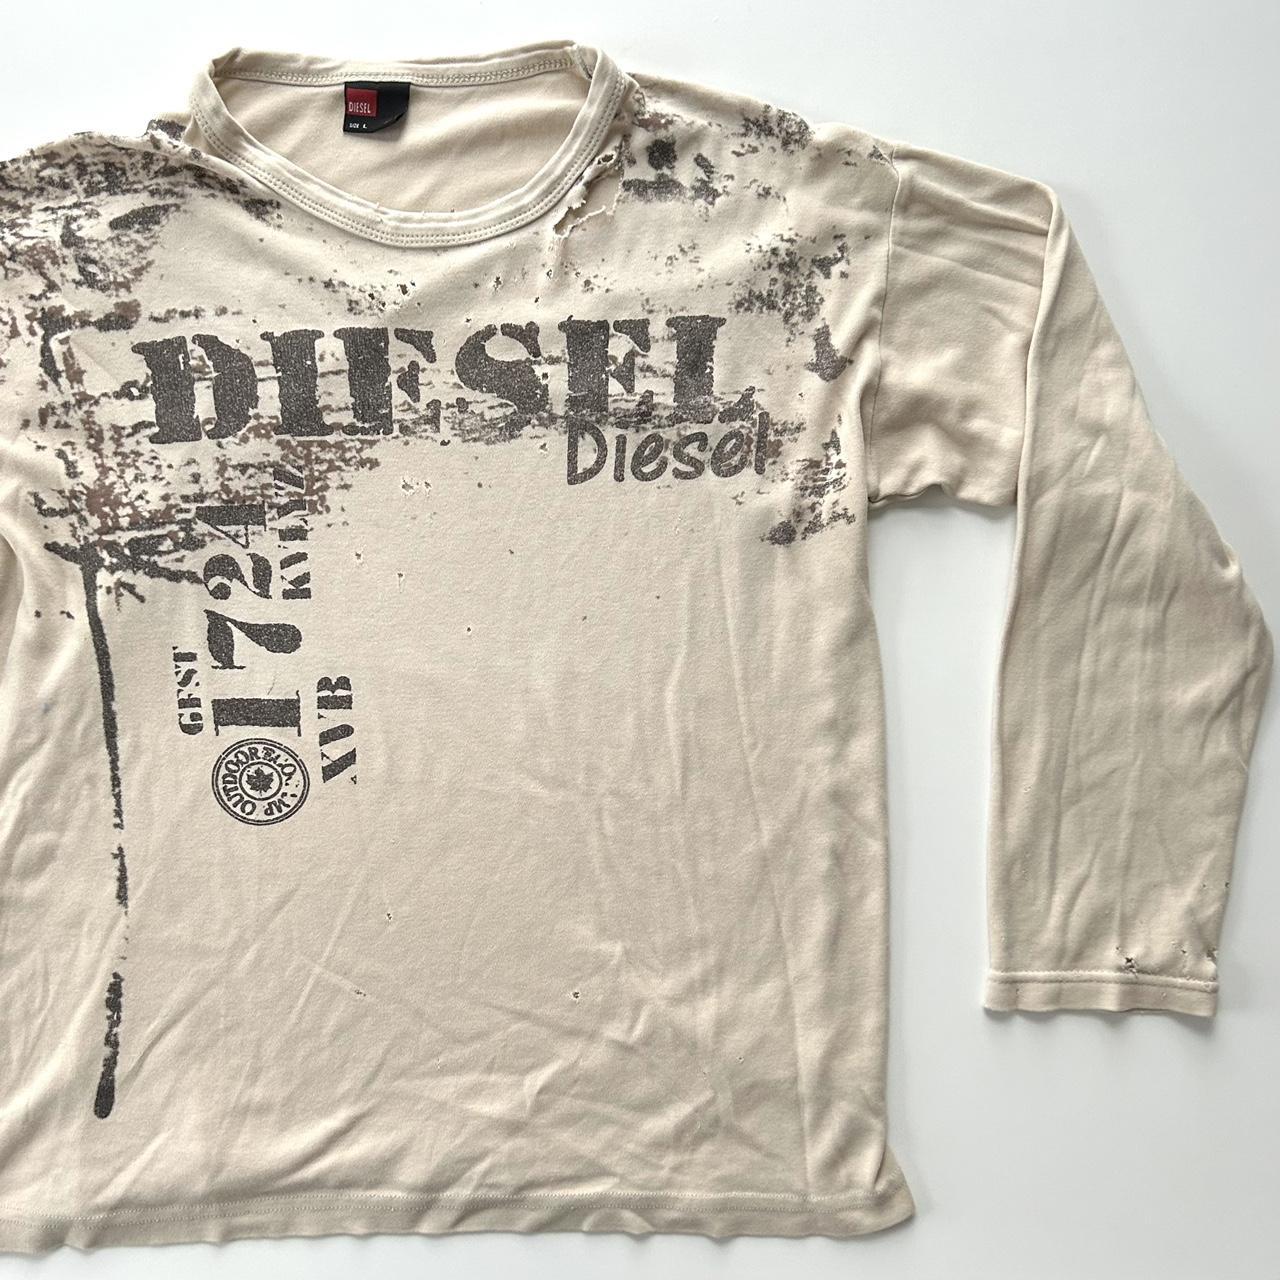 Diesel Women's Cream and Black T-shirt (2)